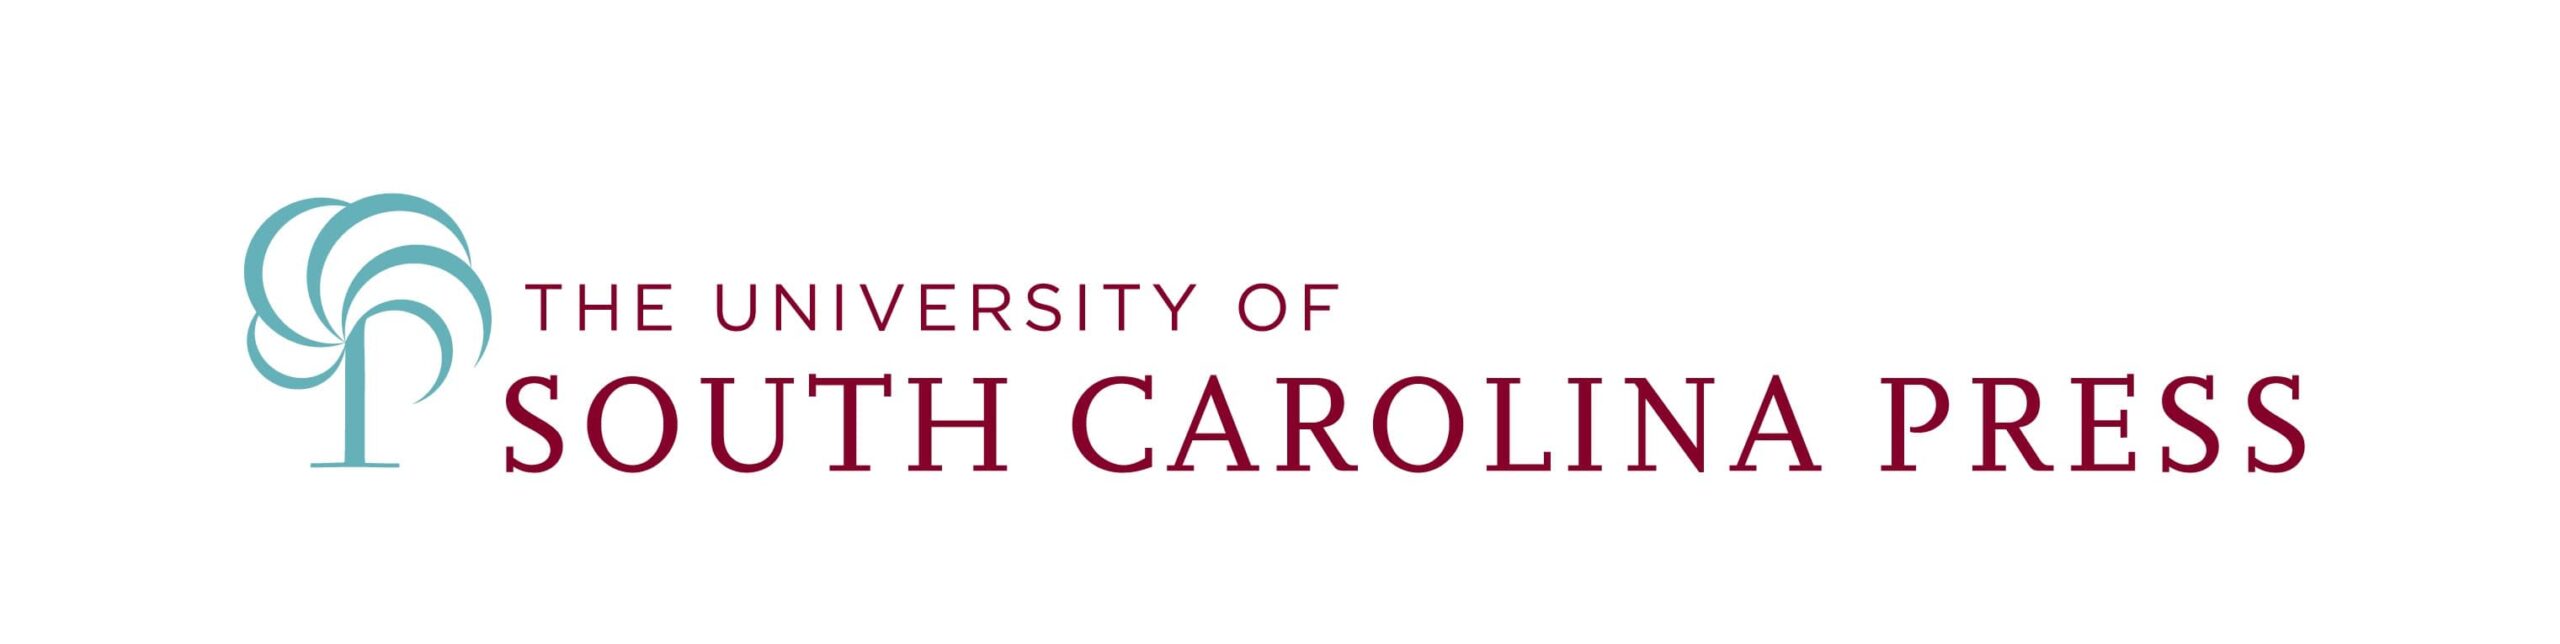 University of South Carolina Press logo